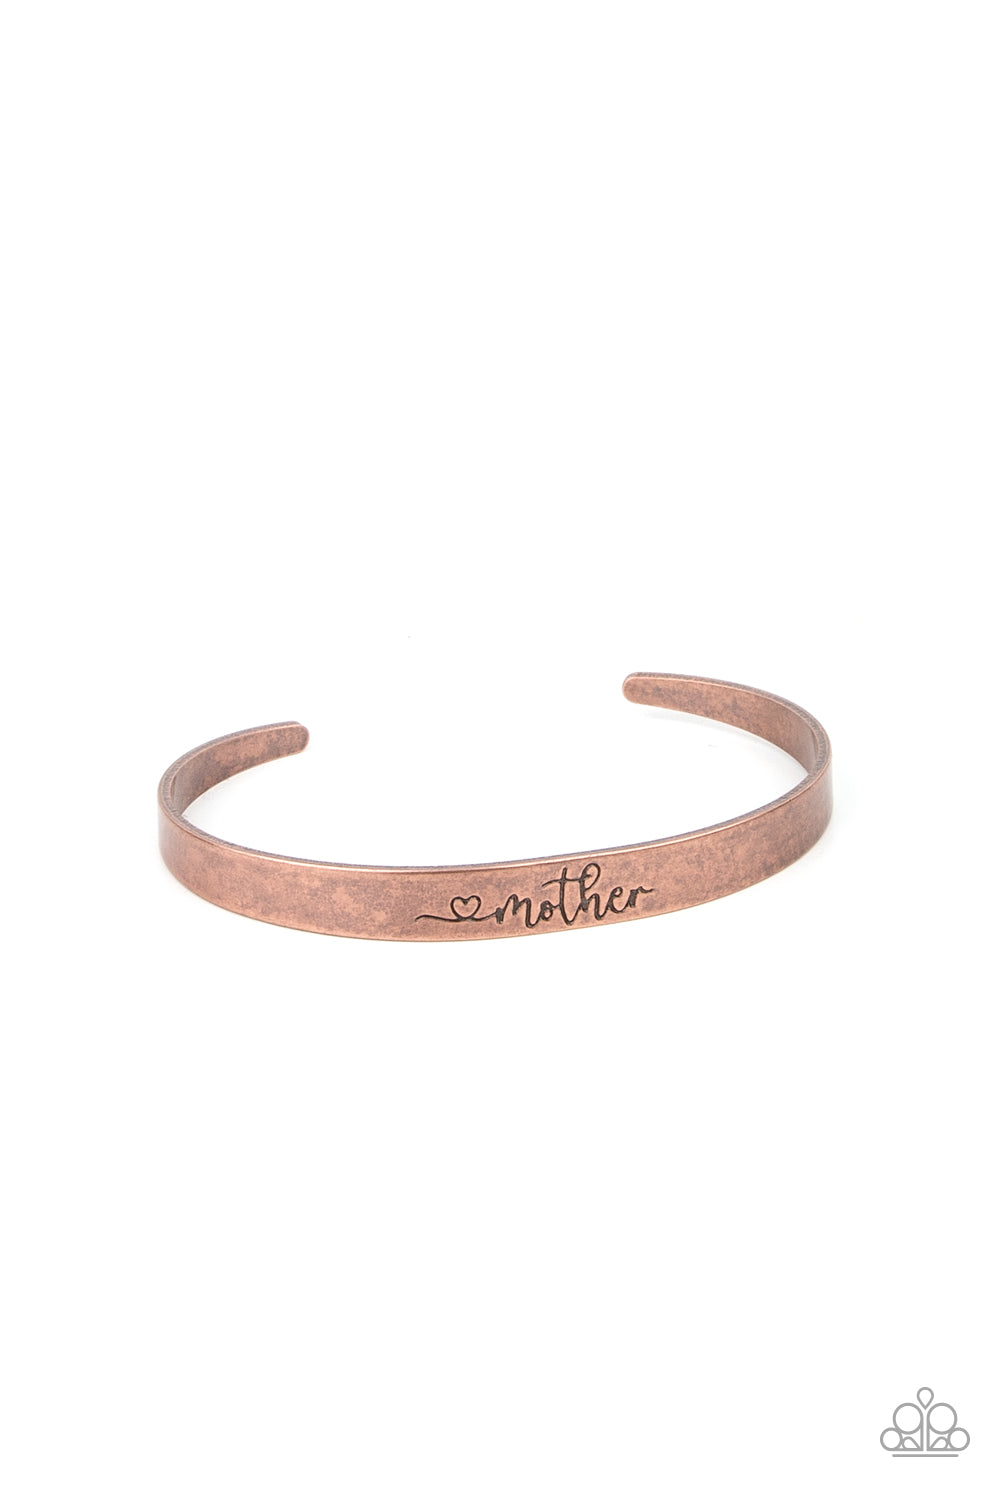 Sweetly Named - Copper (Mother) Bracelet